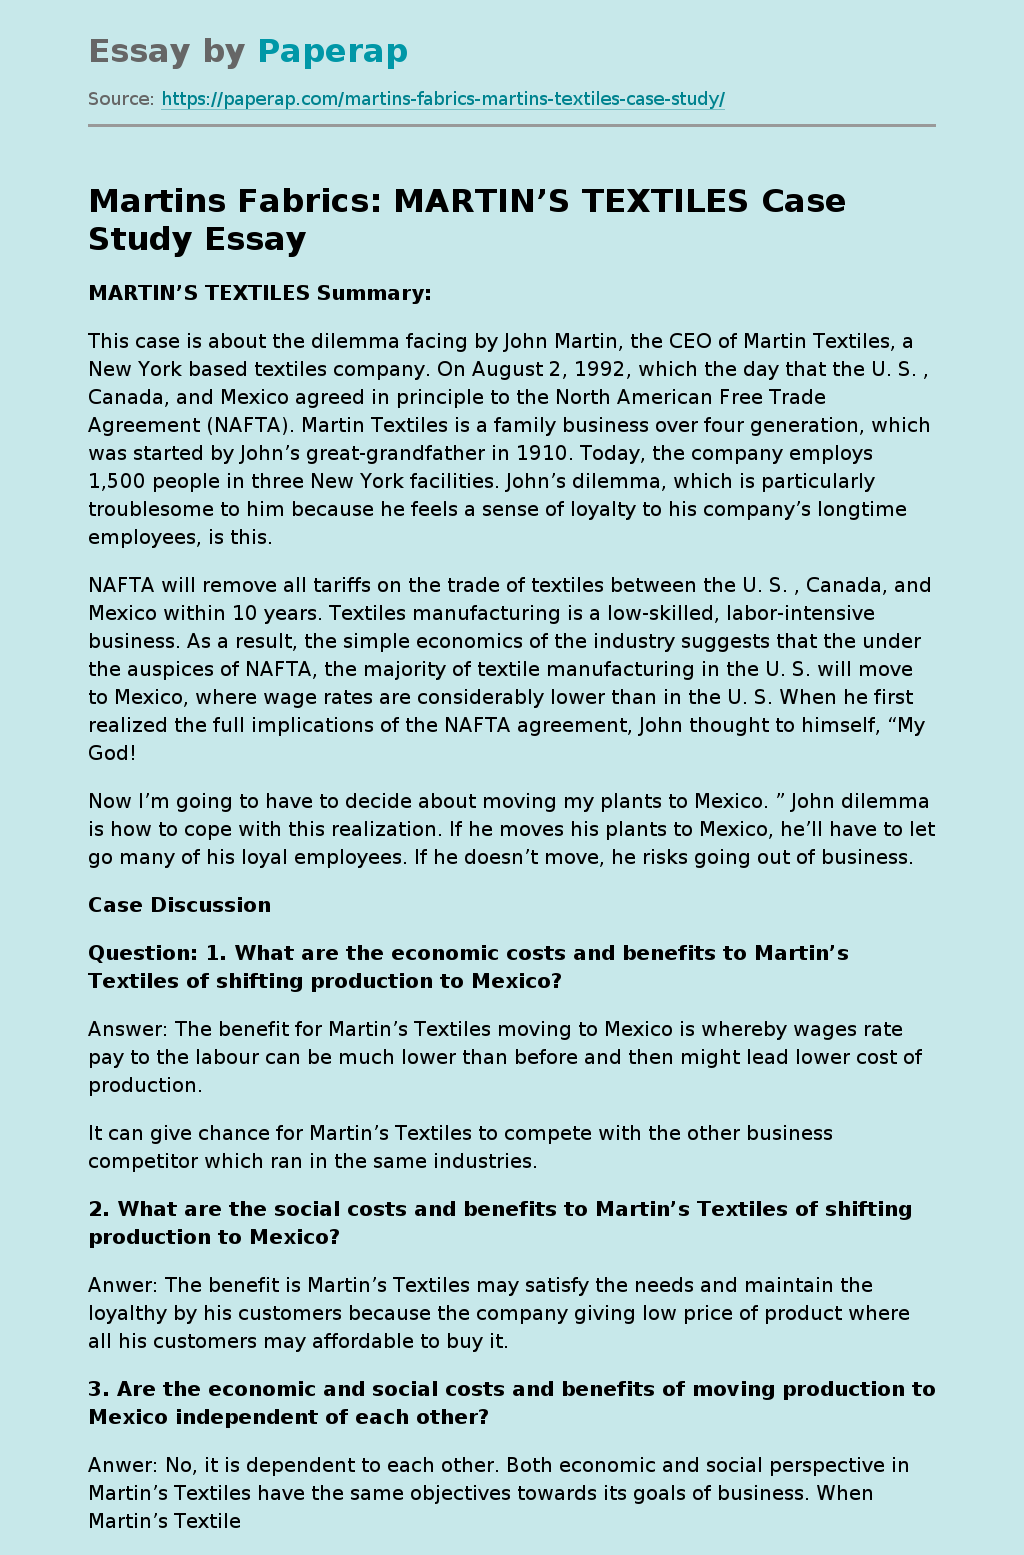 Martins Fabrics: MARTIN’S TEXTILES Case Study